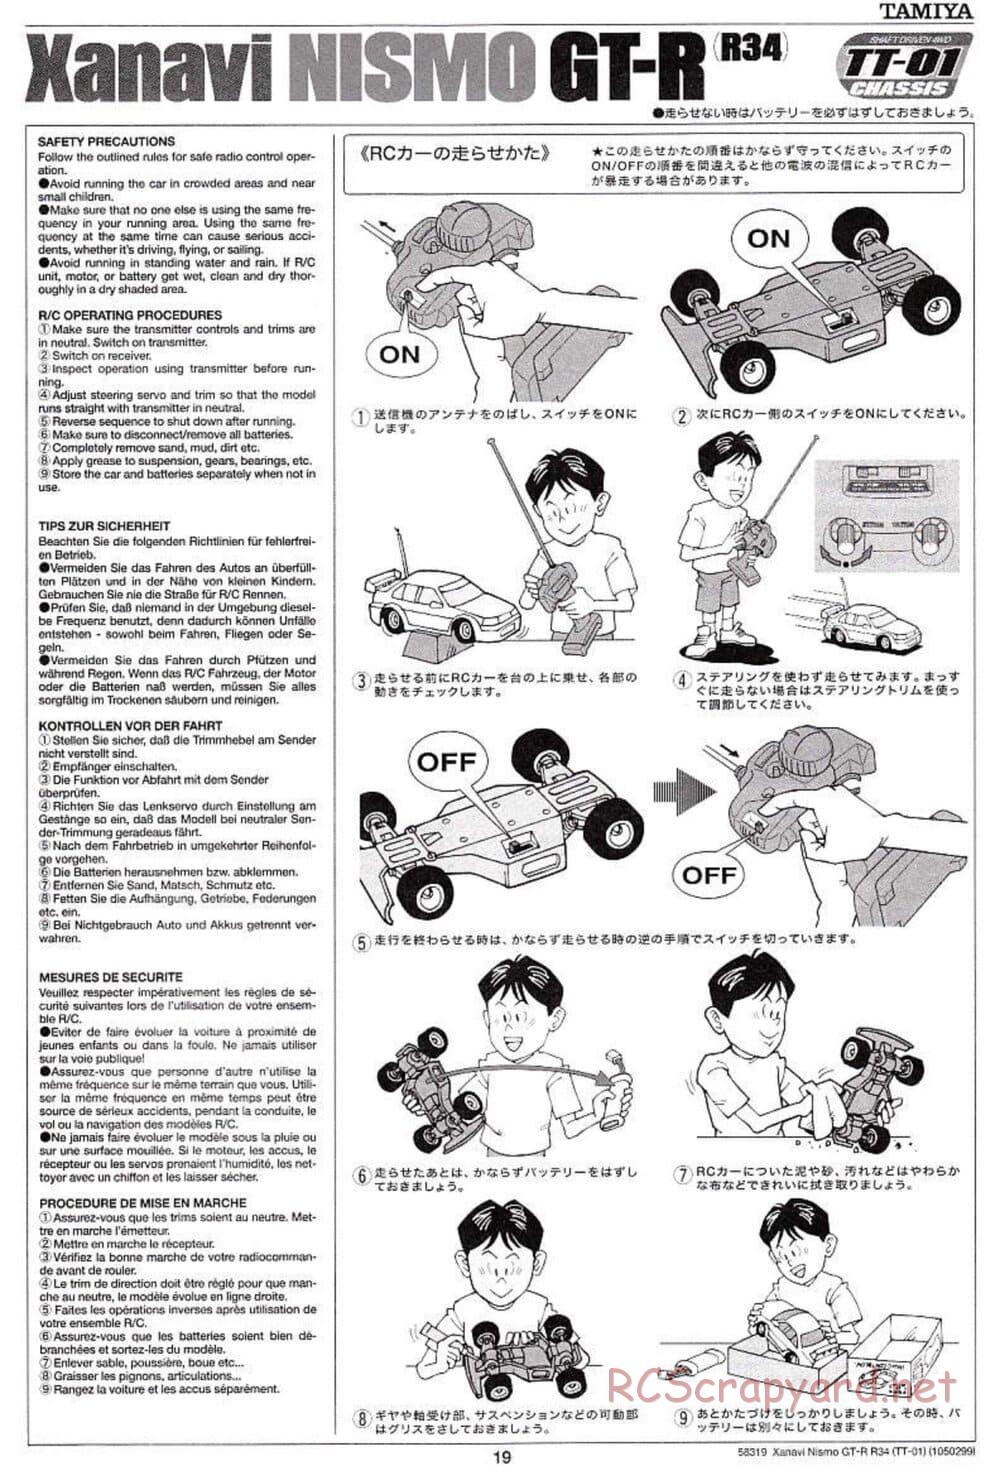 Tamiya - Xanavi Nismo GT-R R34 - TT-01 Chassis - Manual - Page 19